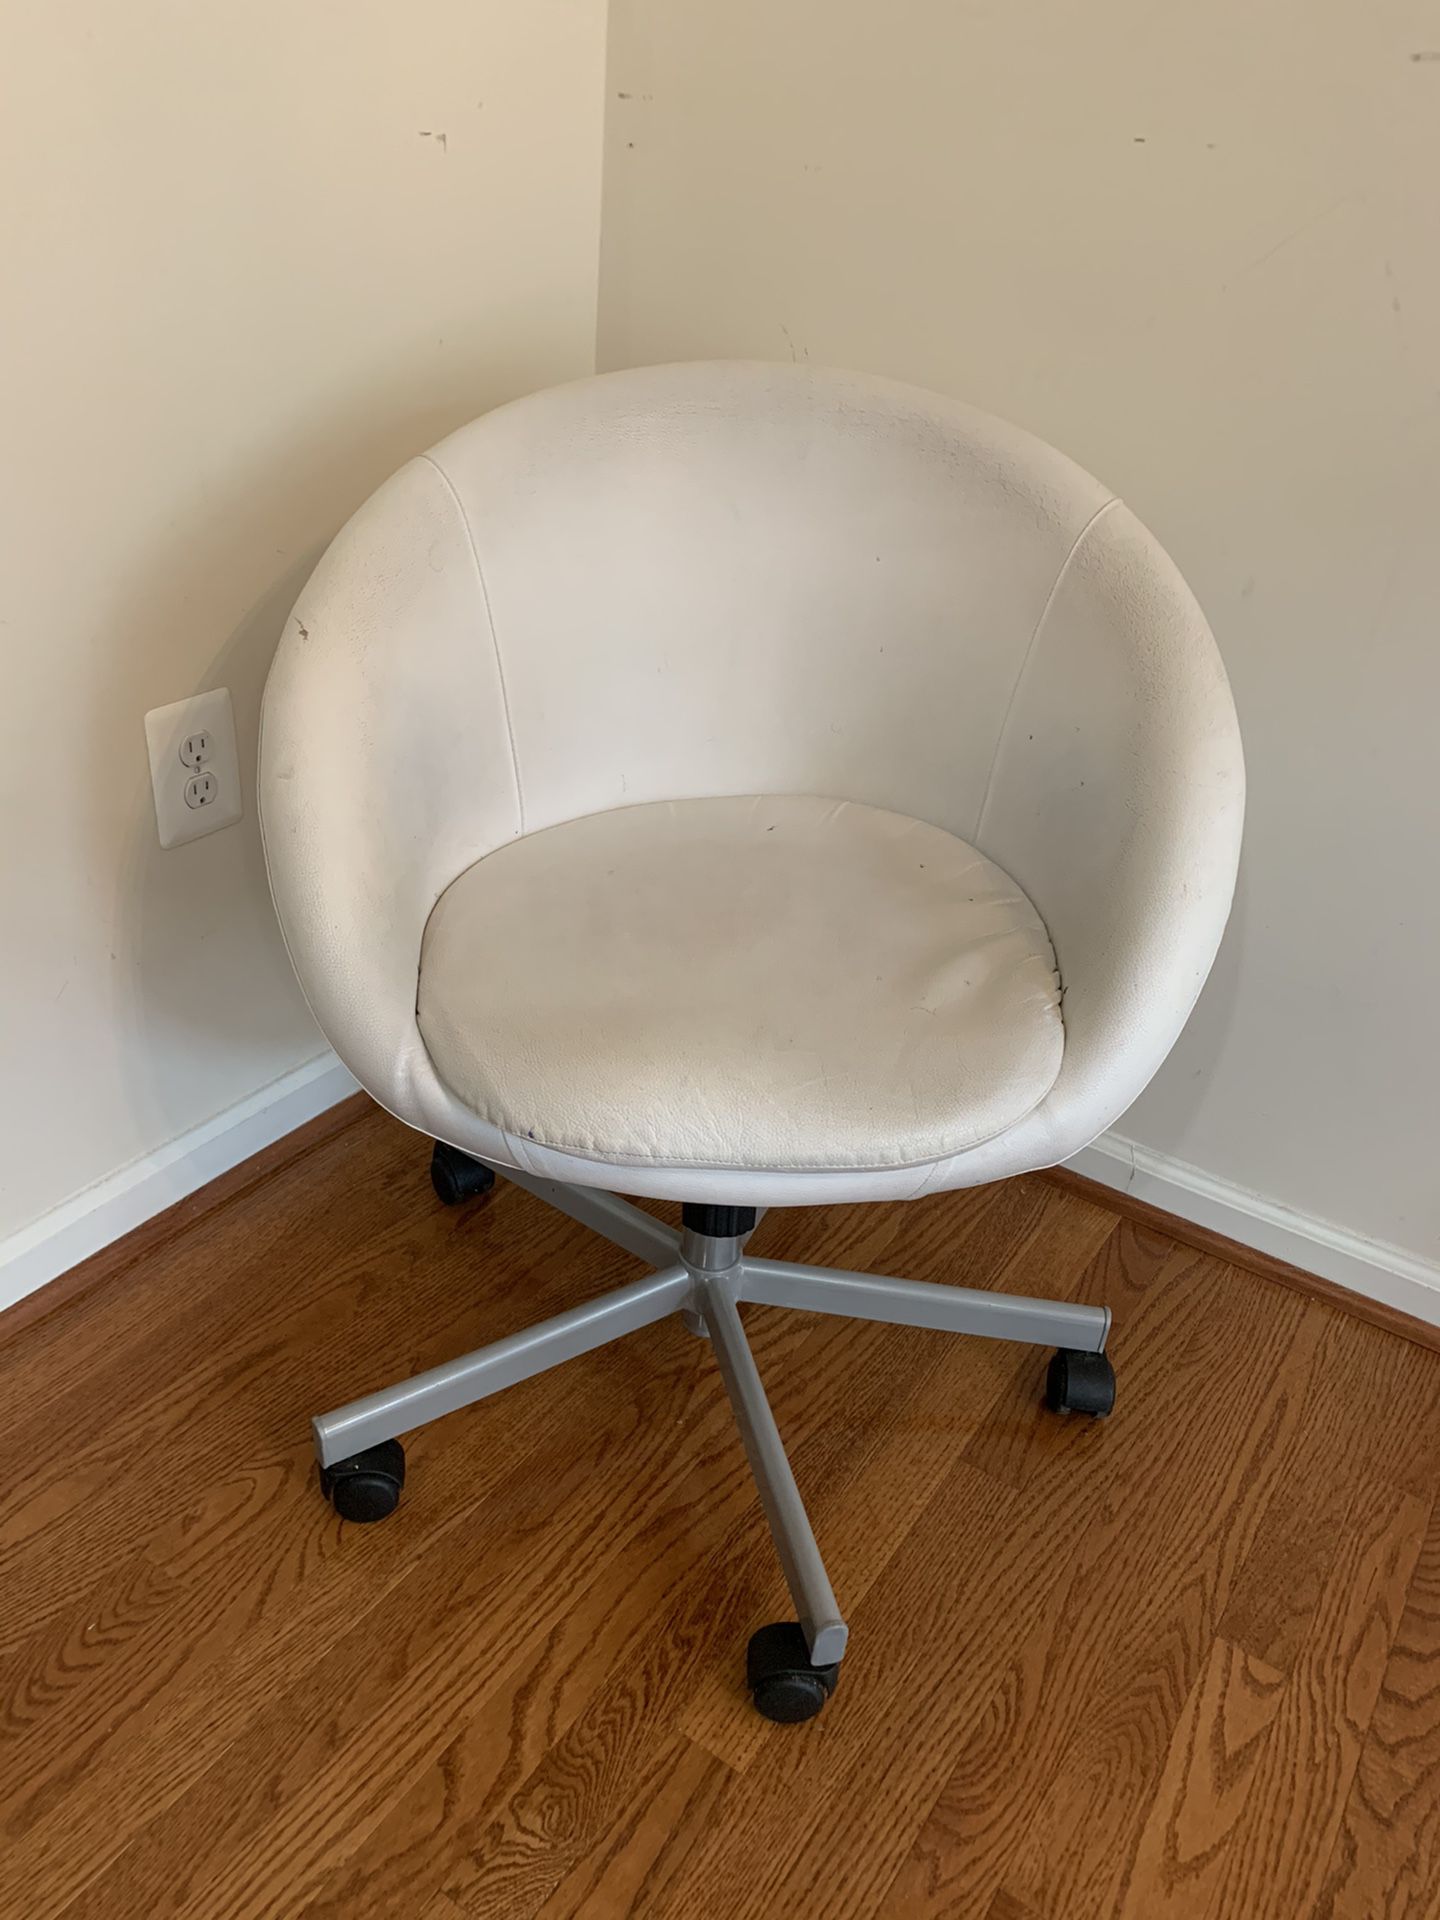 Ikea white desk chair